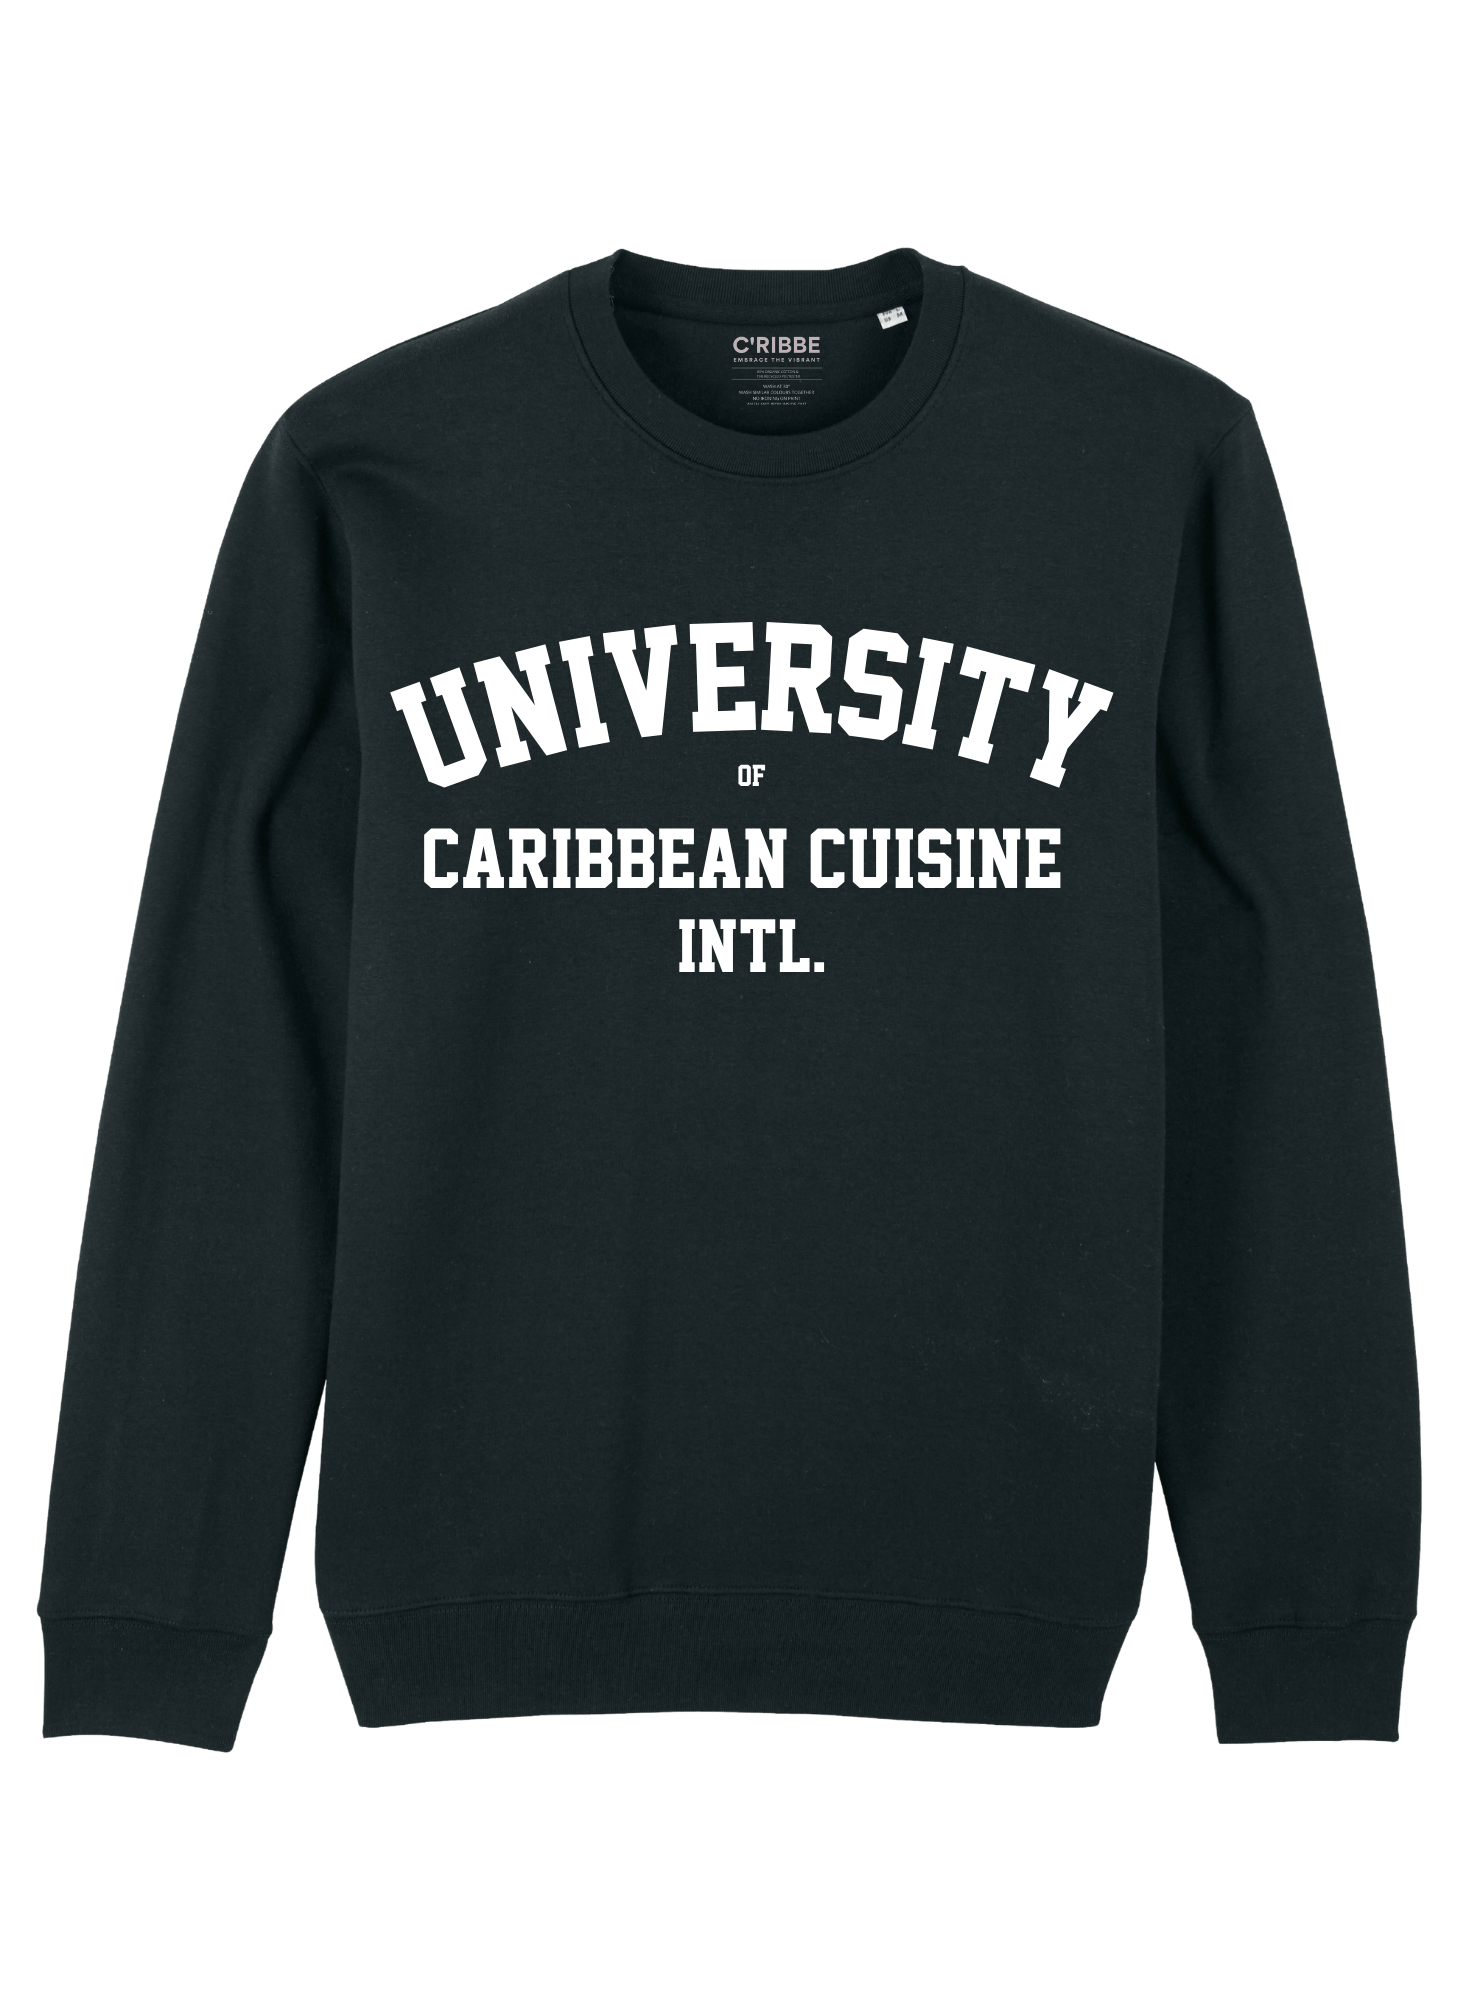 University of Caribbean Cuisine Intl. Unisex Crew Neck Sweatshirt, Black